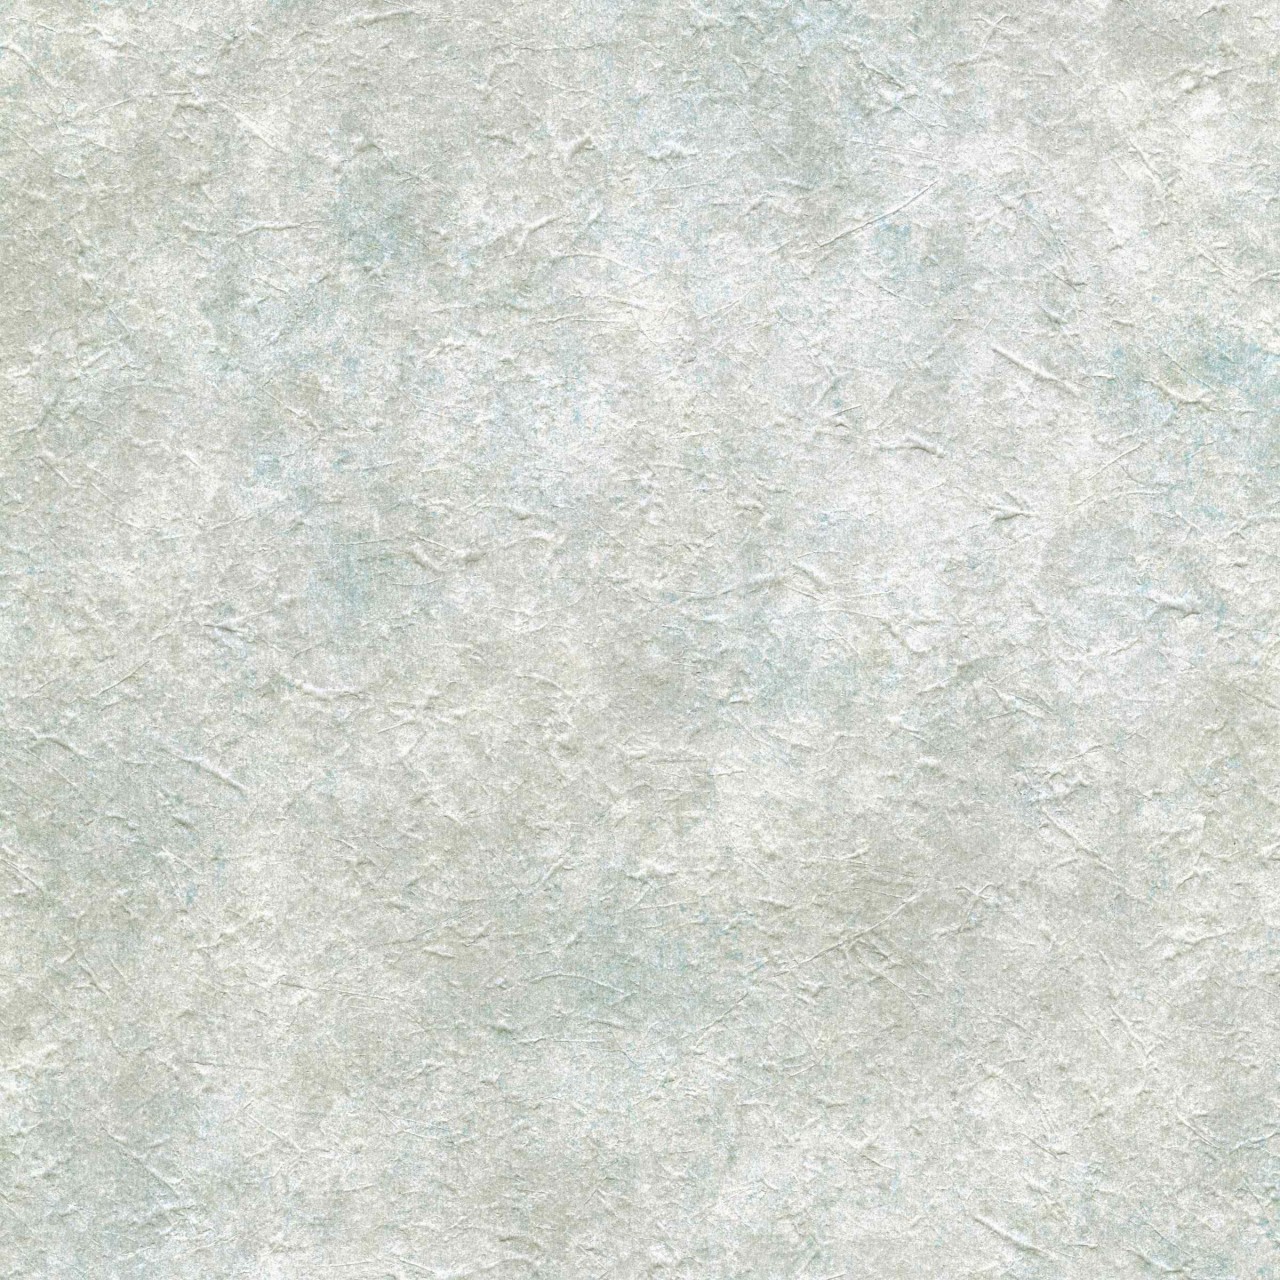 Faux Stone Wallpaper Textured Blue grey 98w2268 faux stone